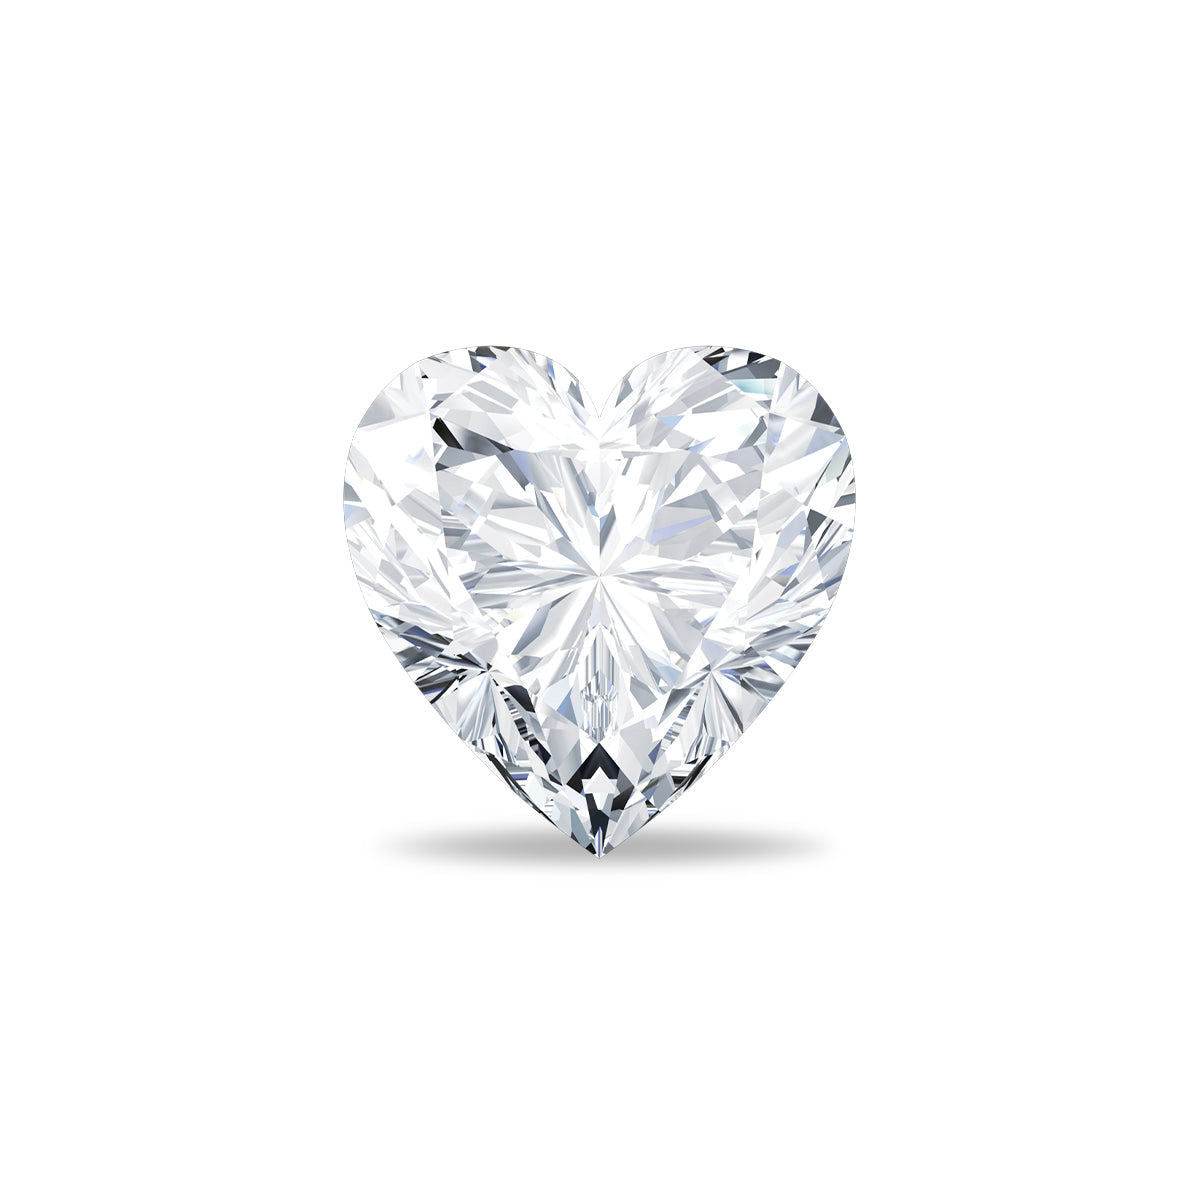 Shimansky Jewellery Heart Shaped Diamond Cut